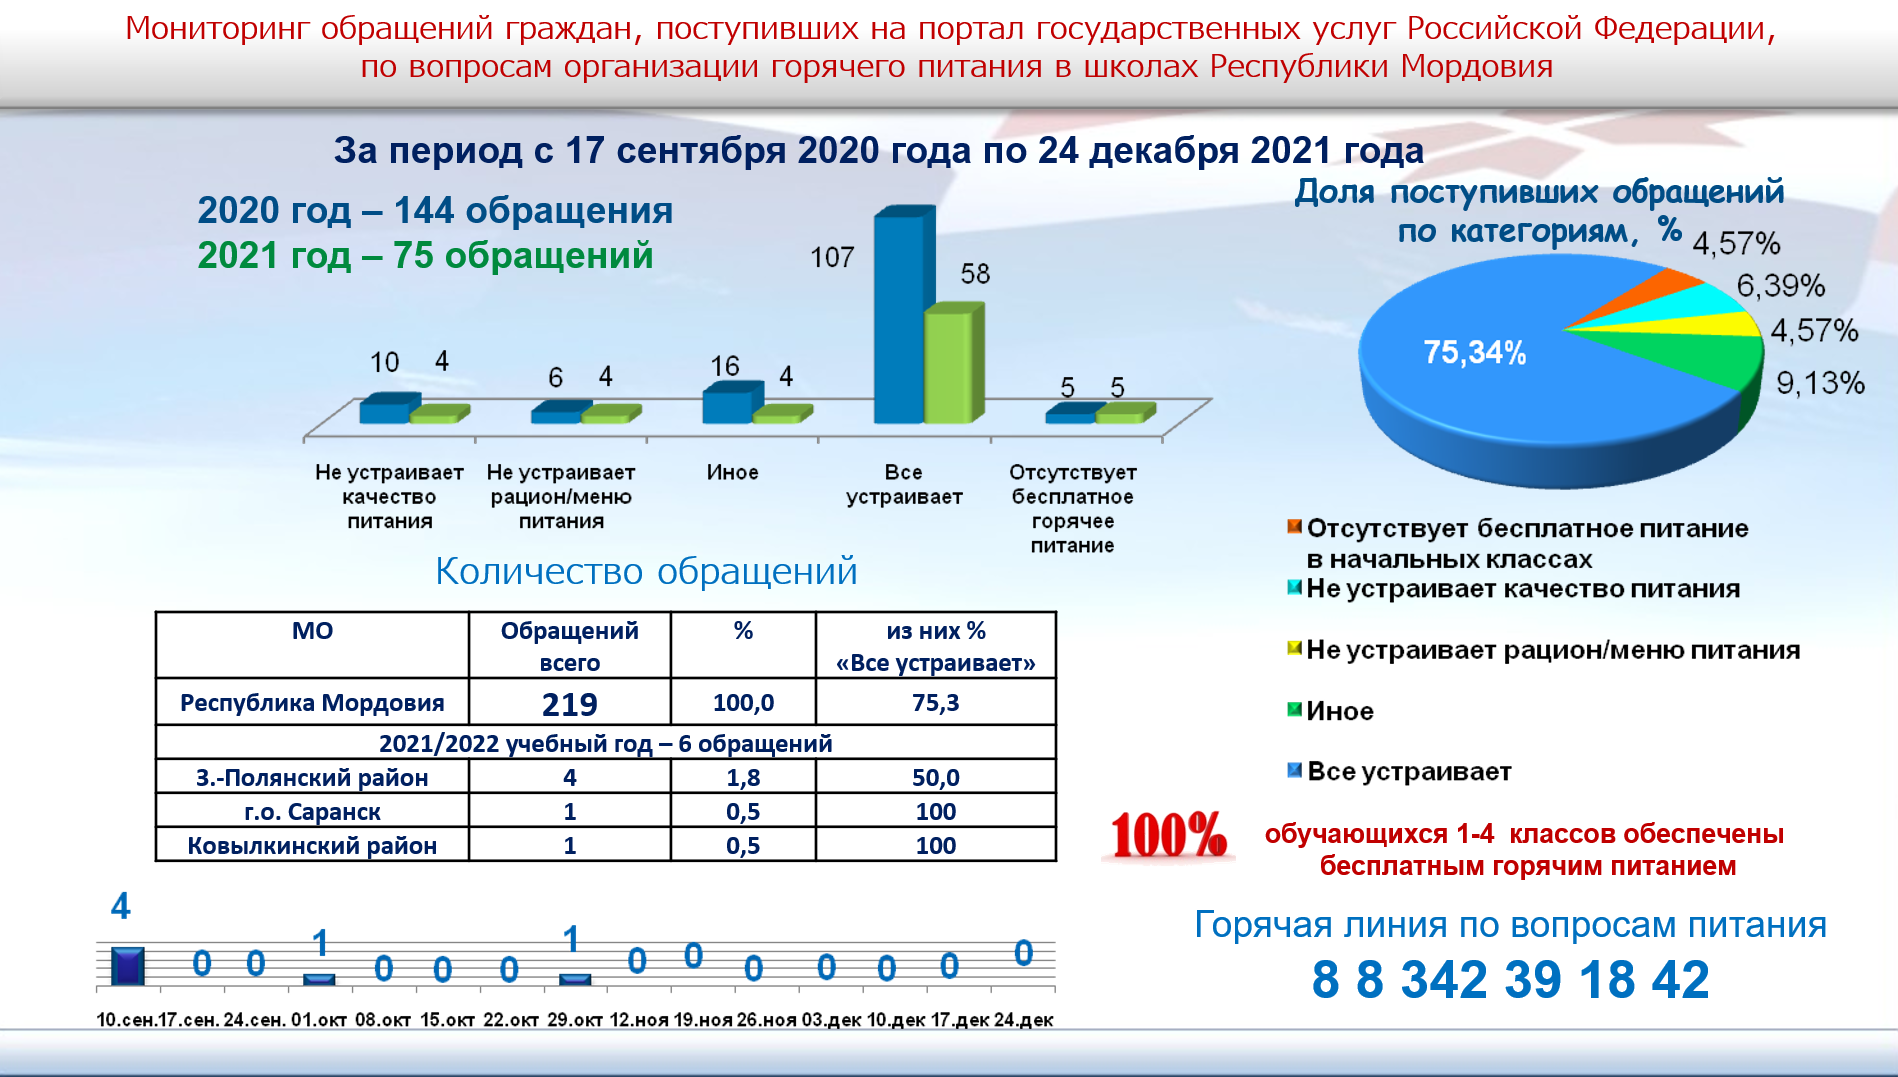 Мониторинг в образовании Республика Молдова 2020. Сайт 2020 рф